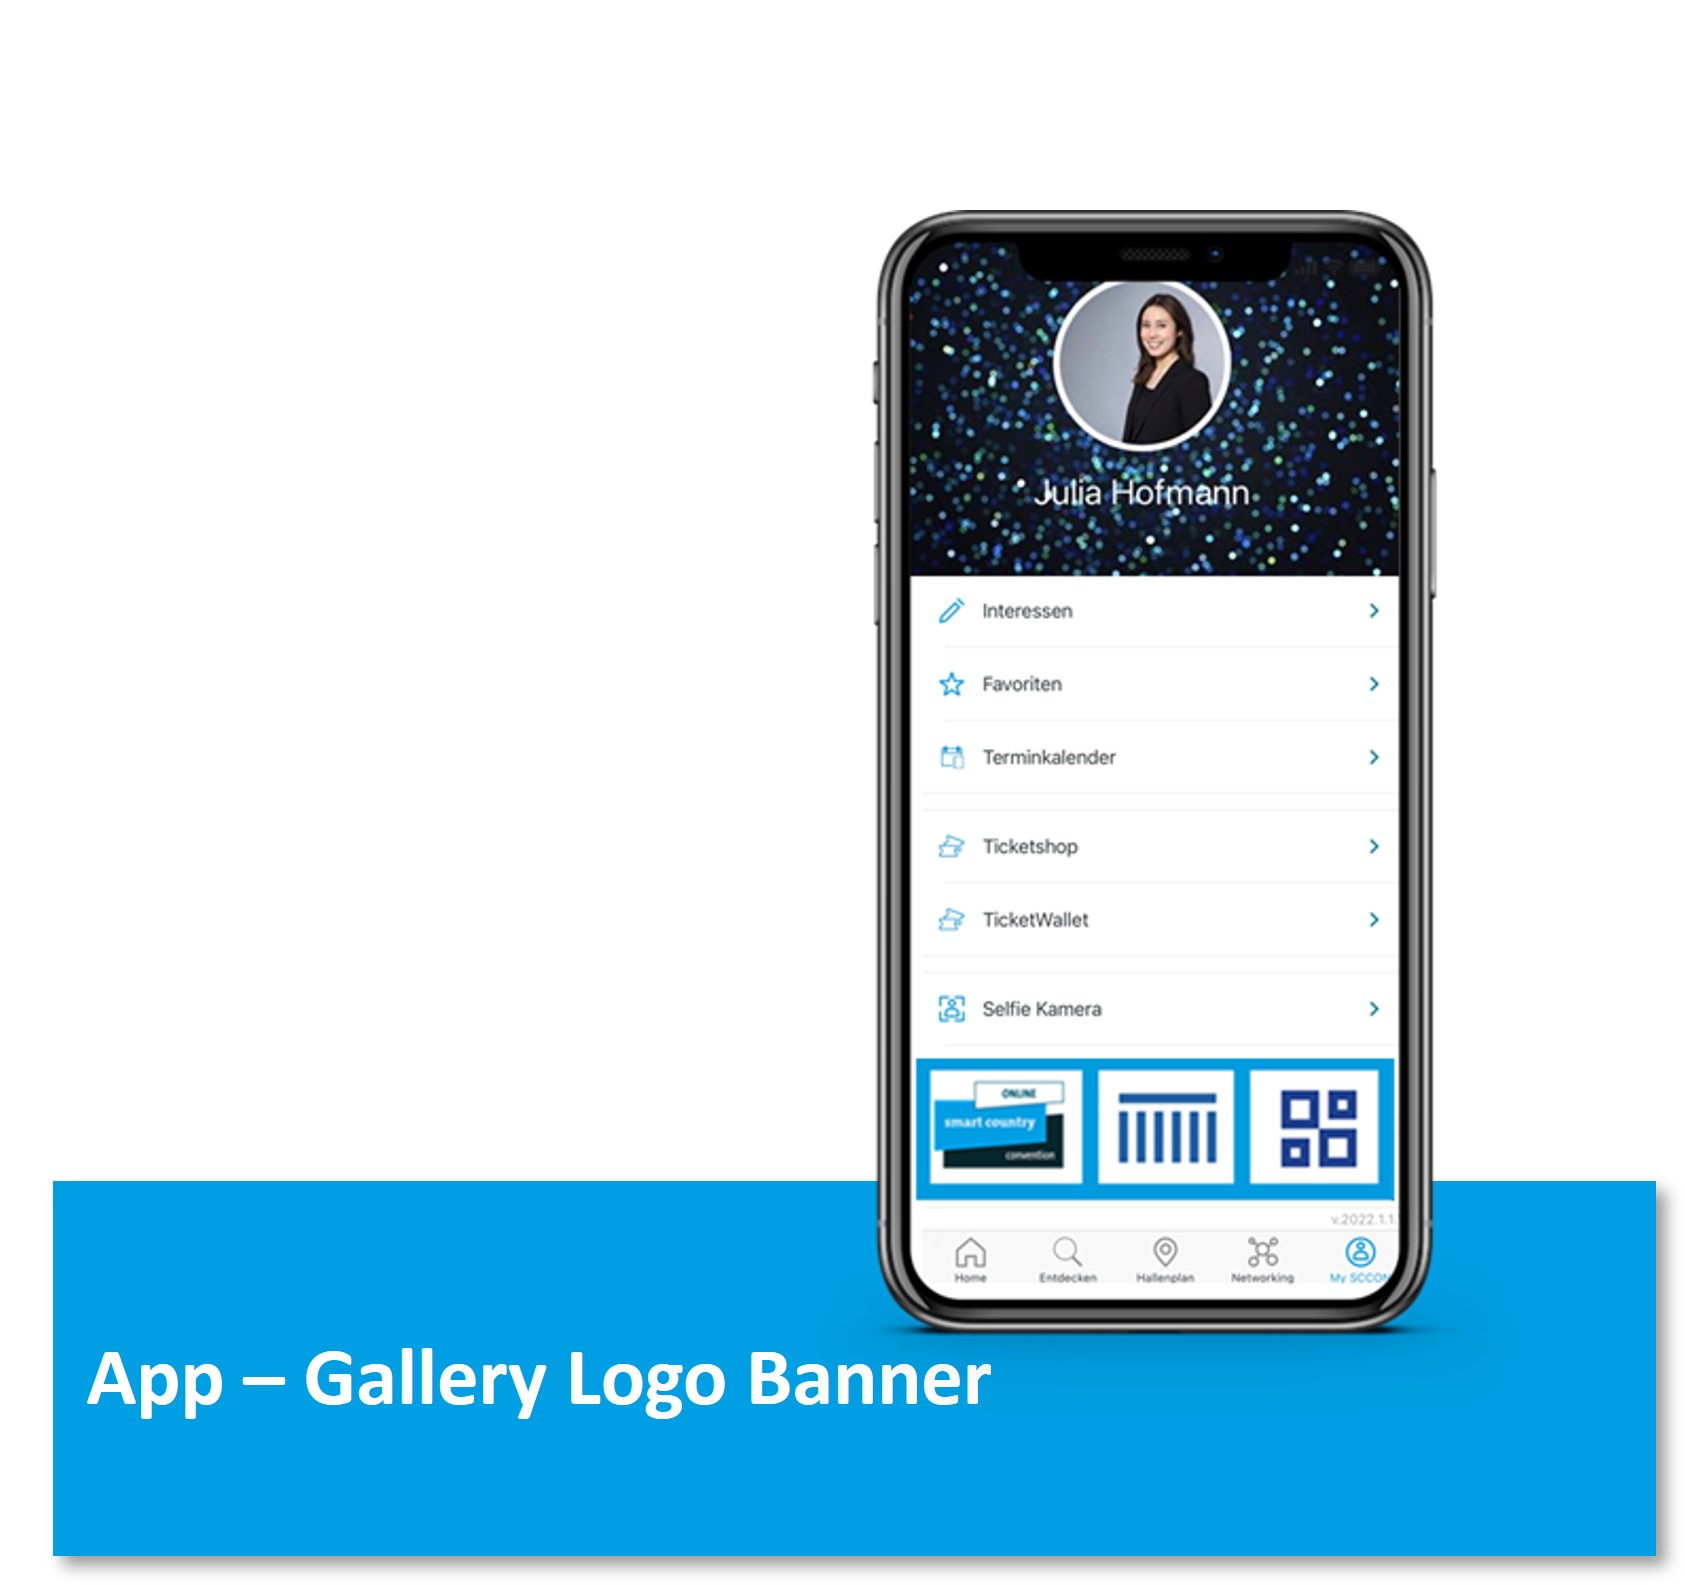 Gallery Logo Banner - App 